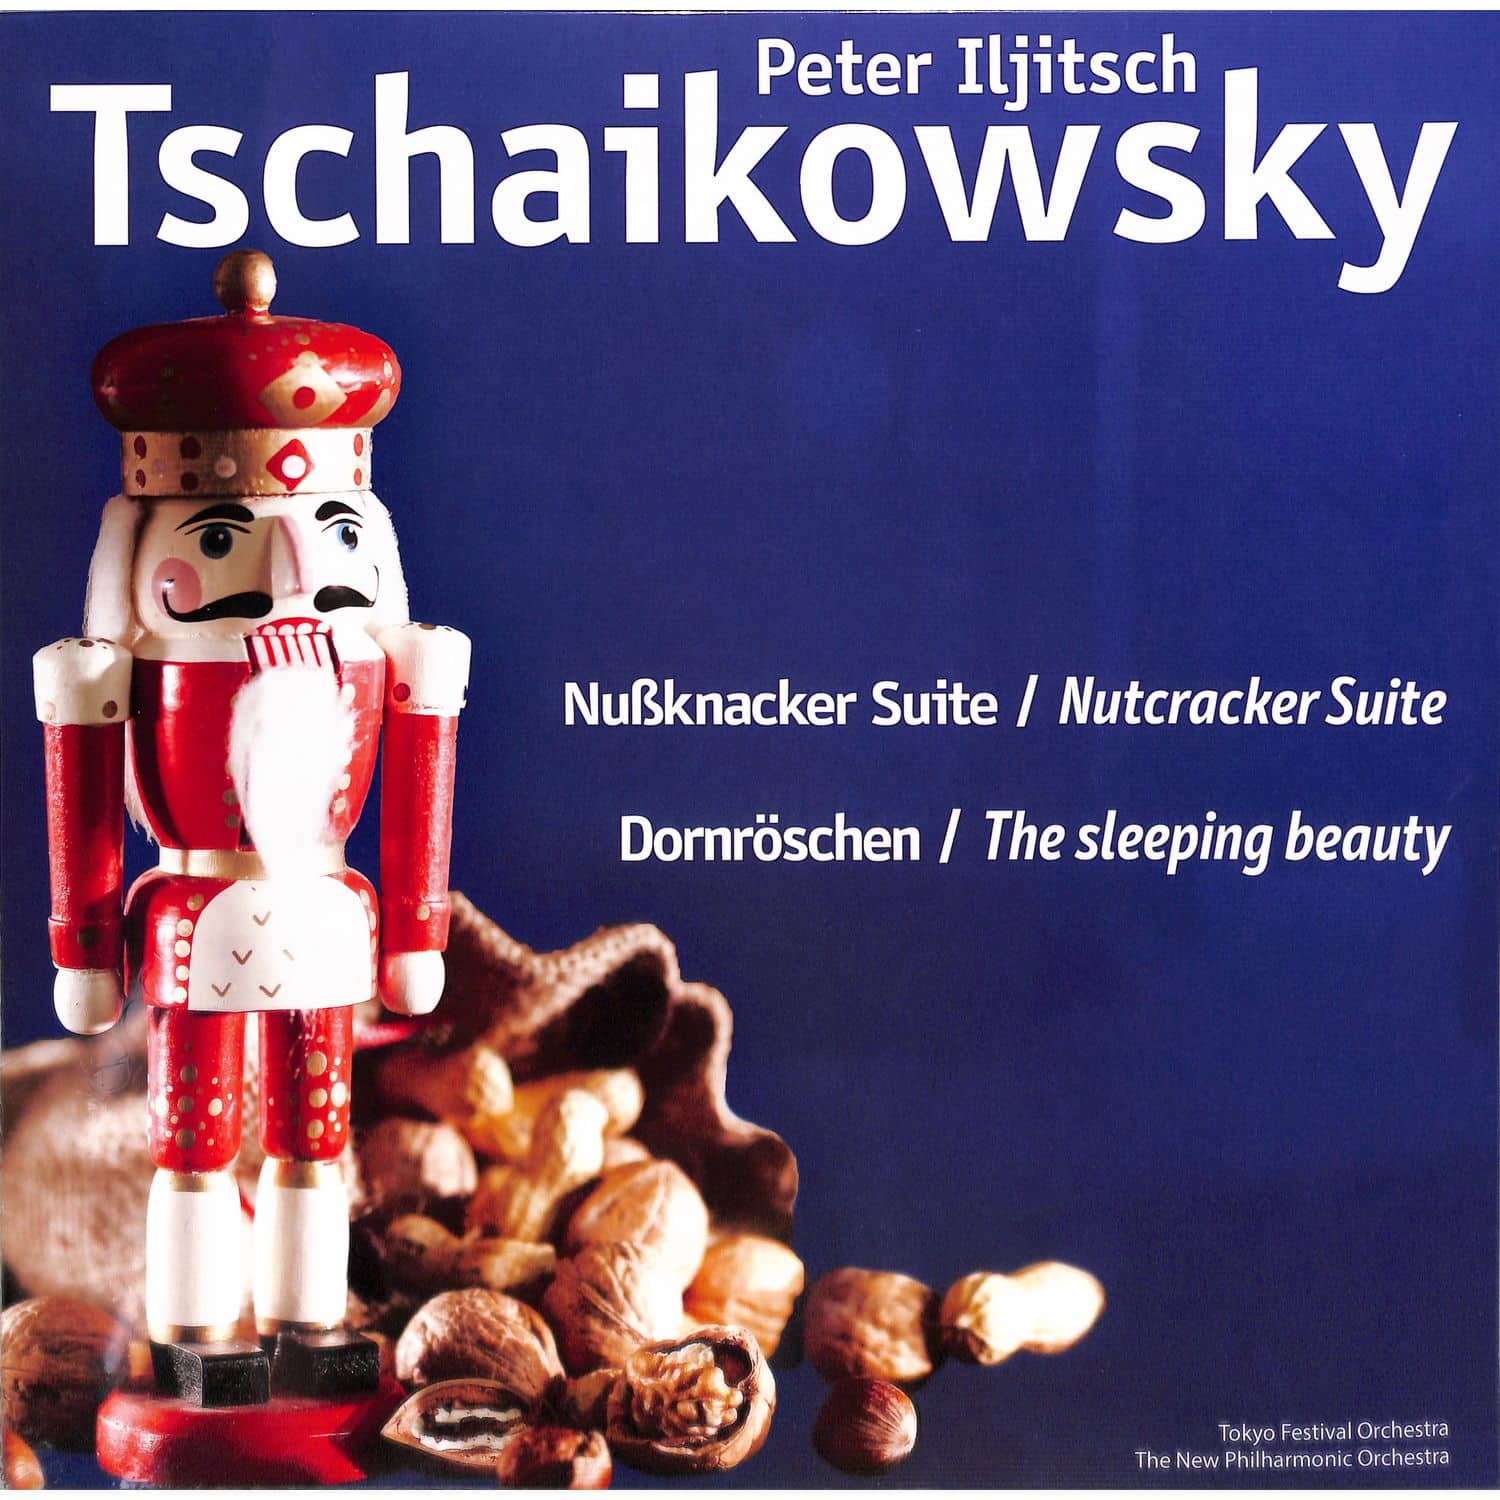 Peter Iljitsch Tschaikowsky - NUSSKNACKER SUITE 